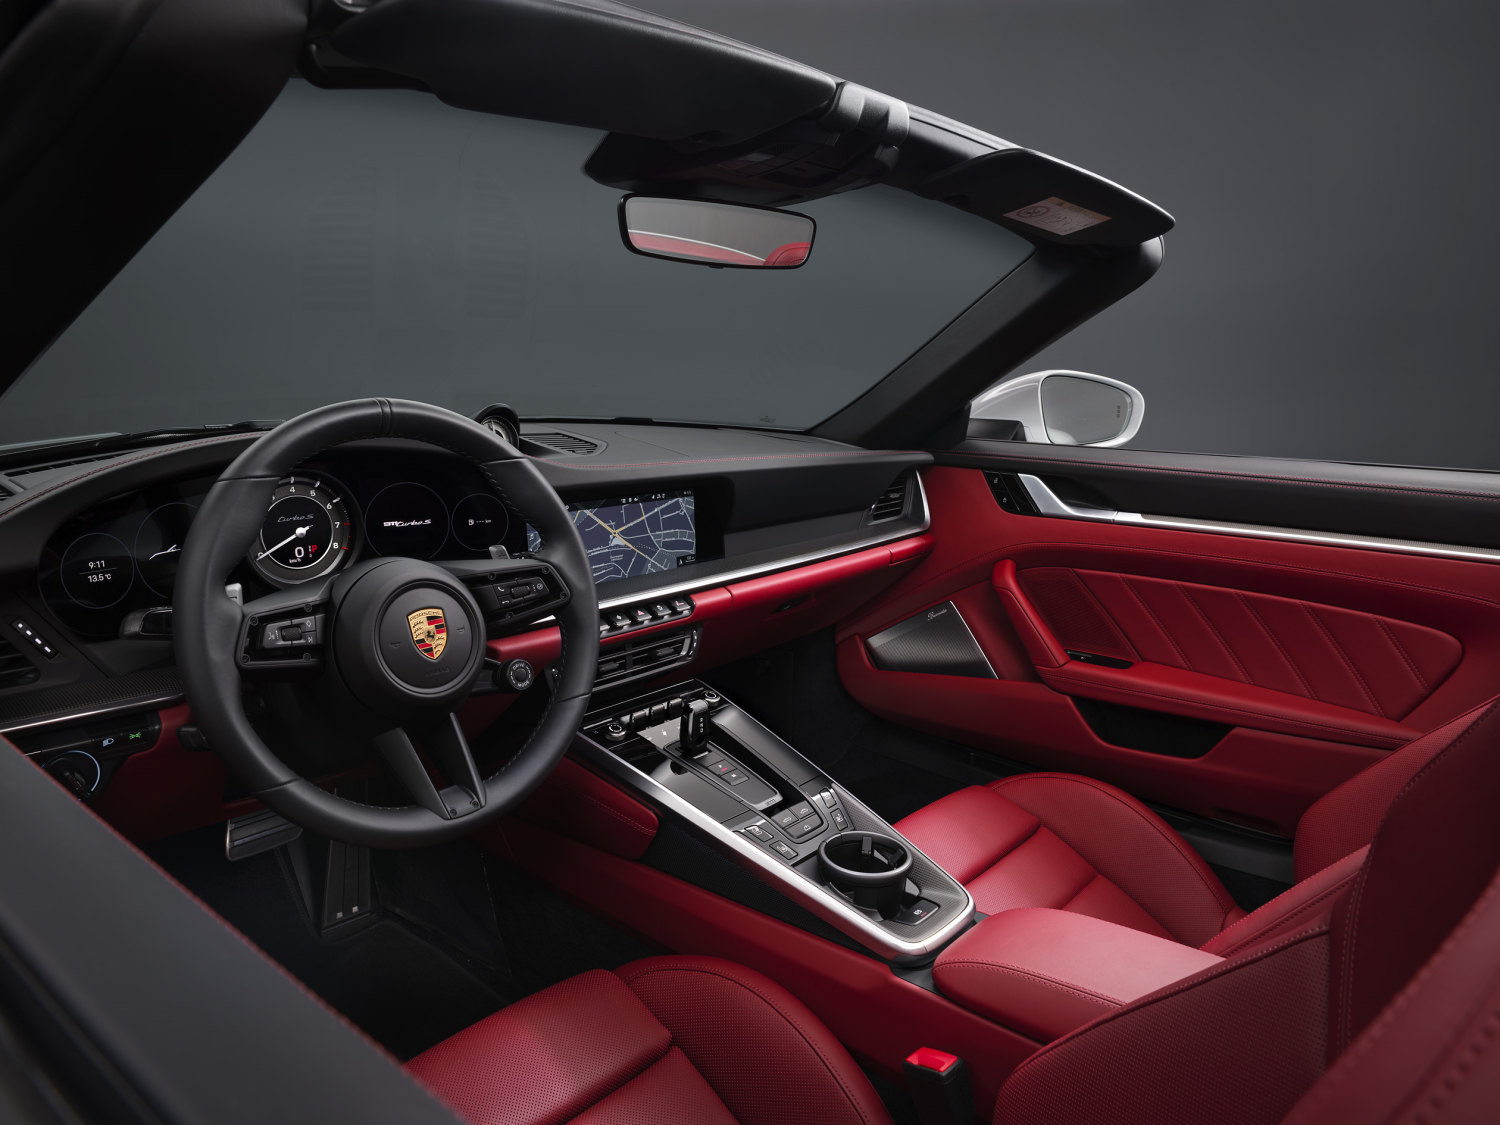 The Porsche 911 Turbo S Cabriolet Interior